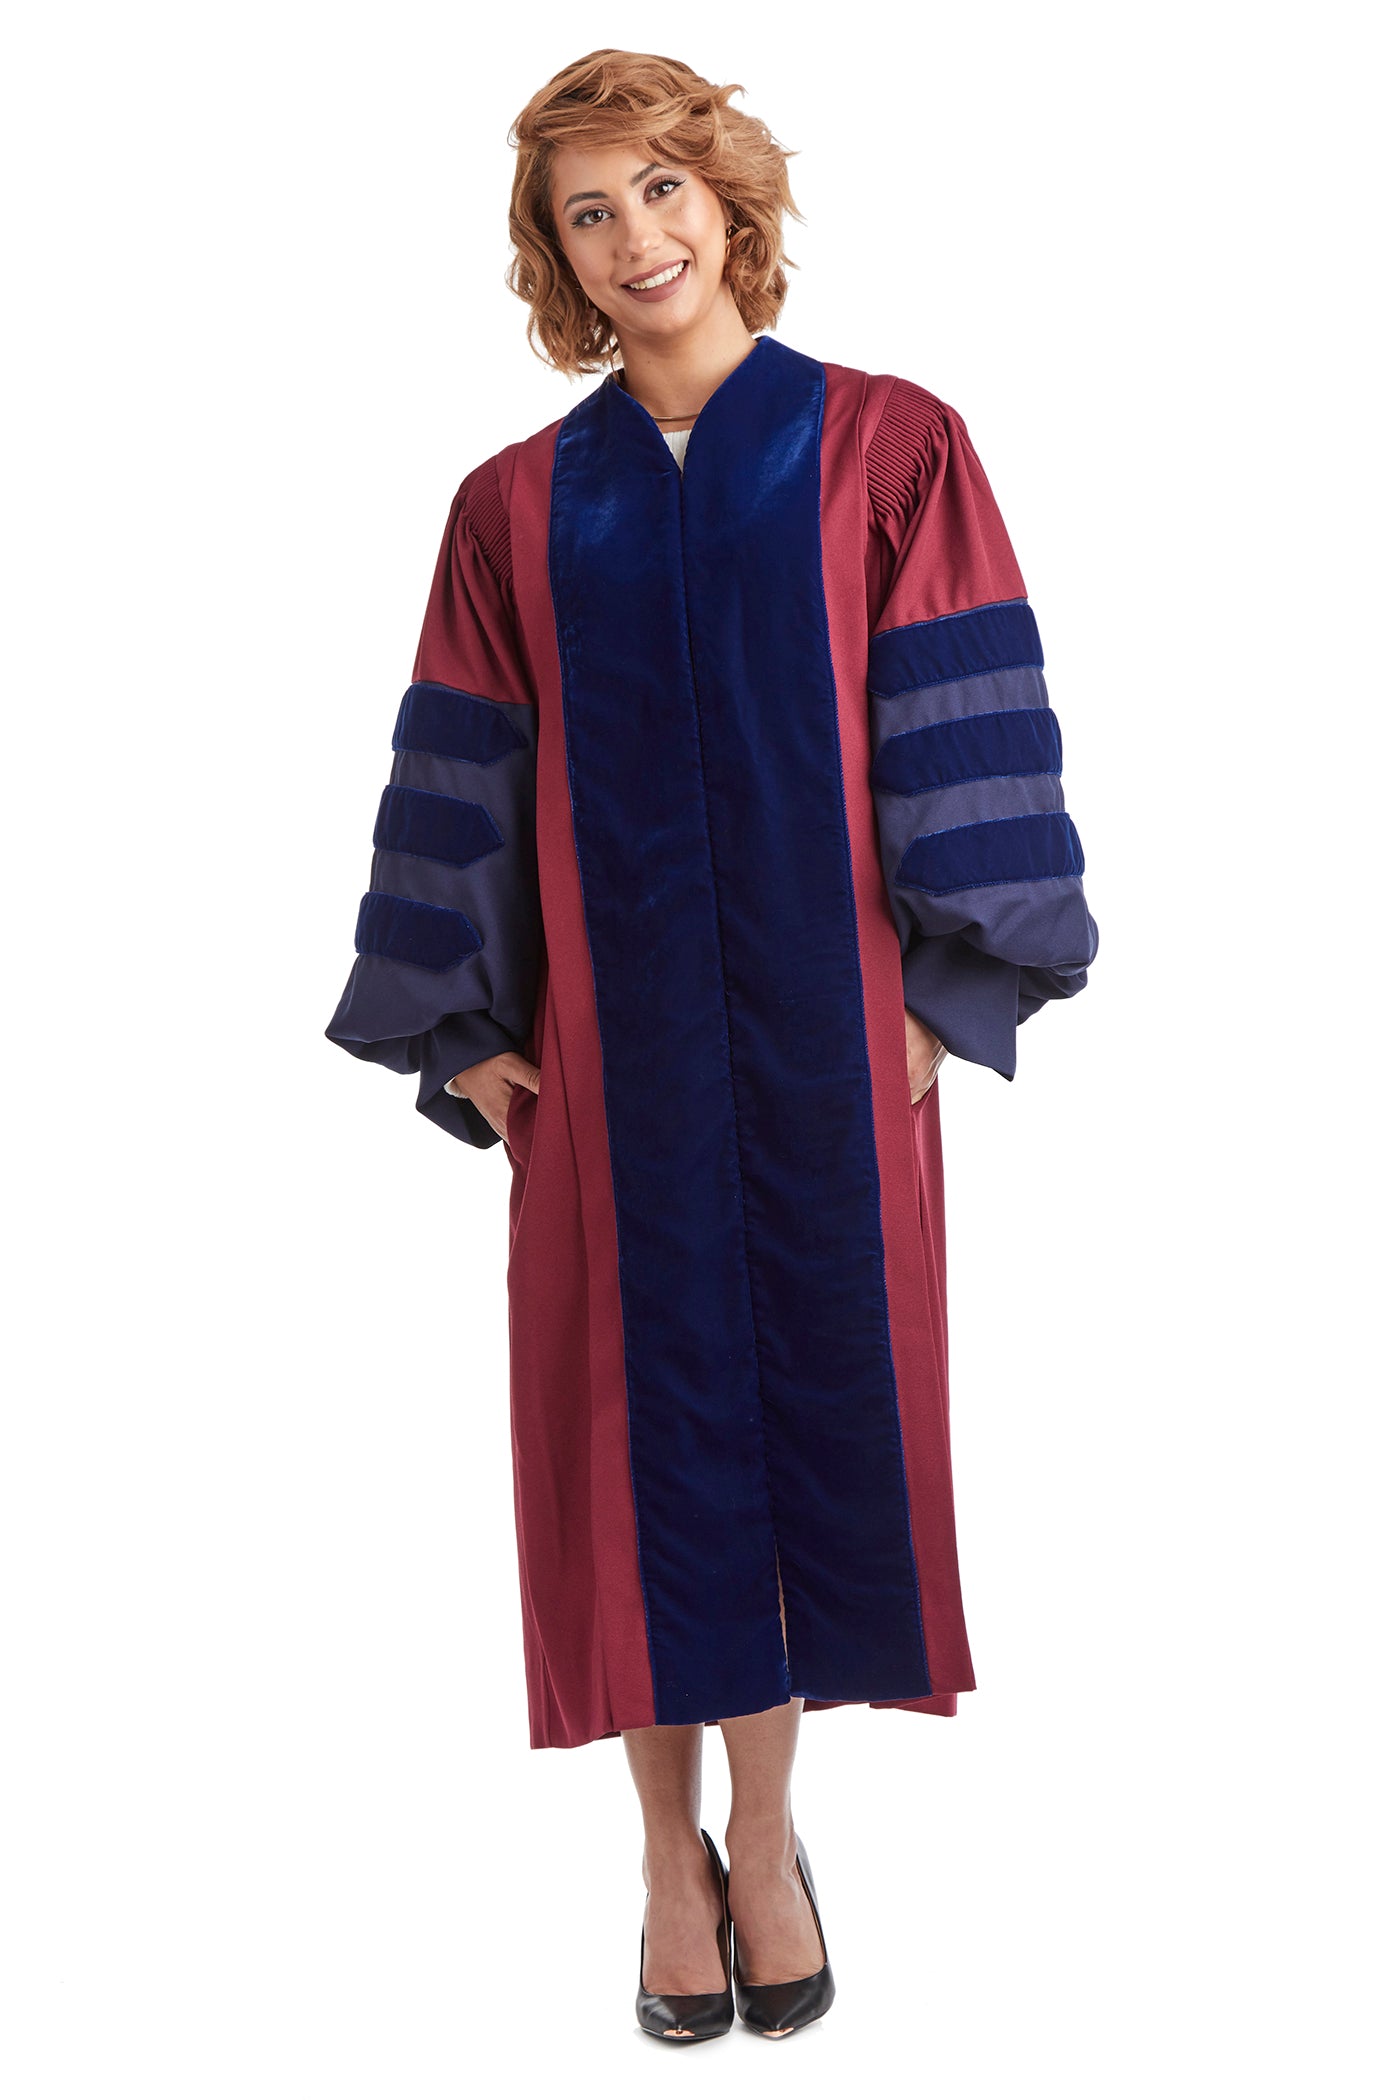 Penn Commencement - Doctoral Regalia - Graduation Gowns, Hoods, Tams ...